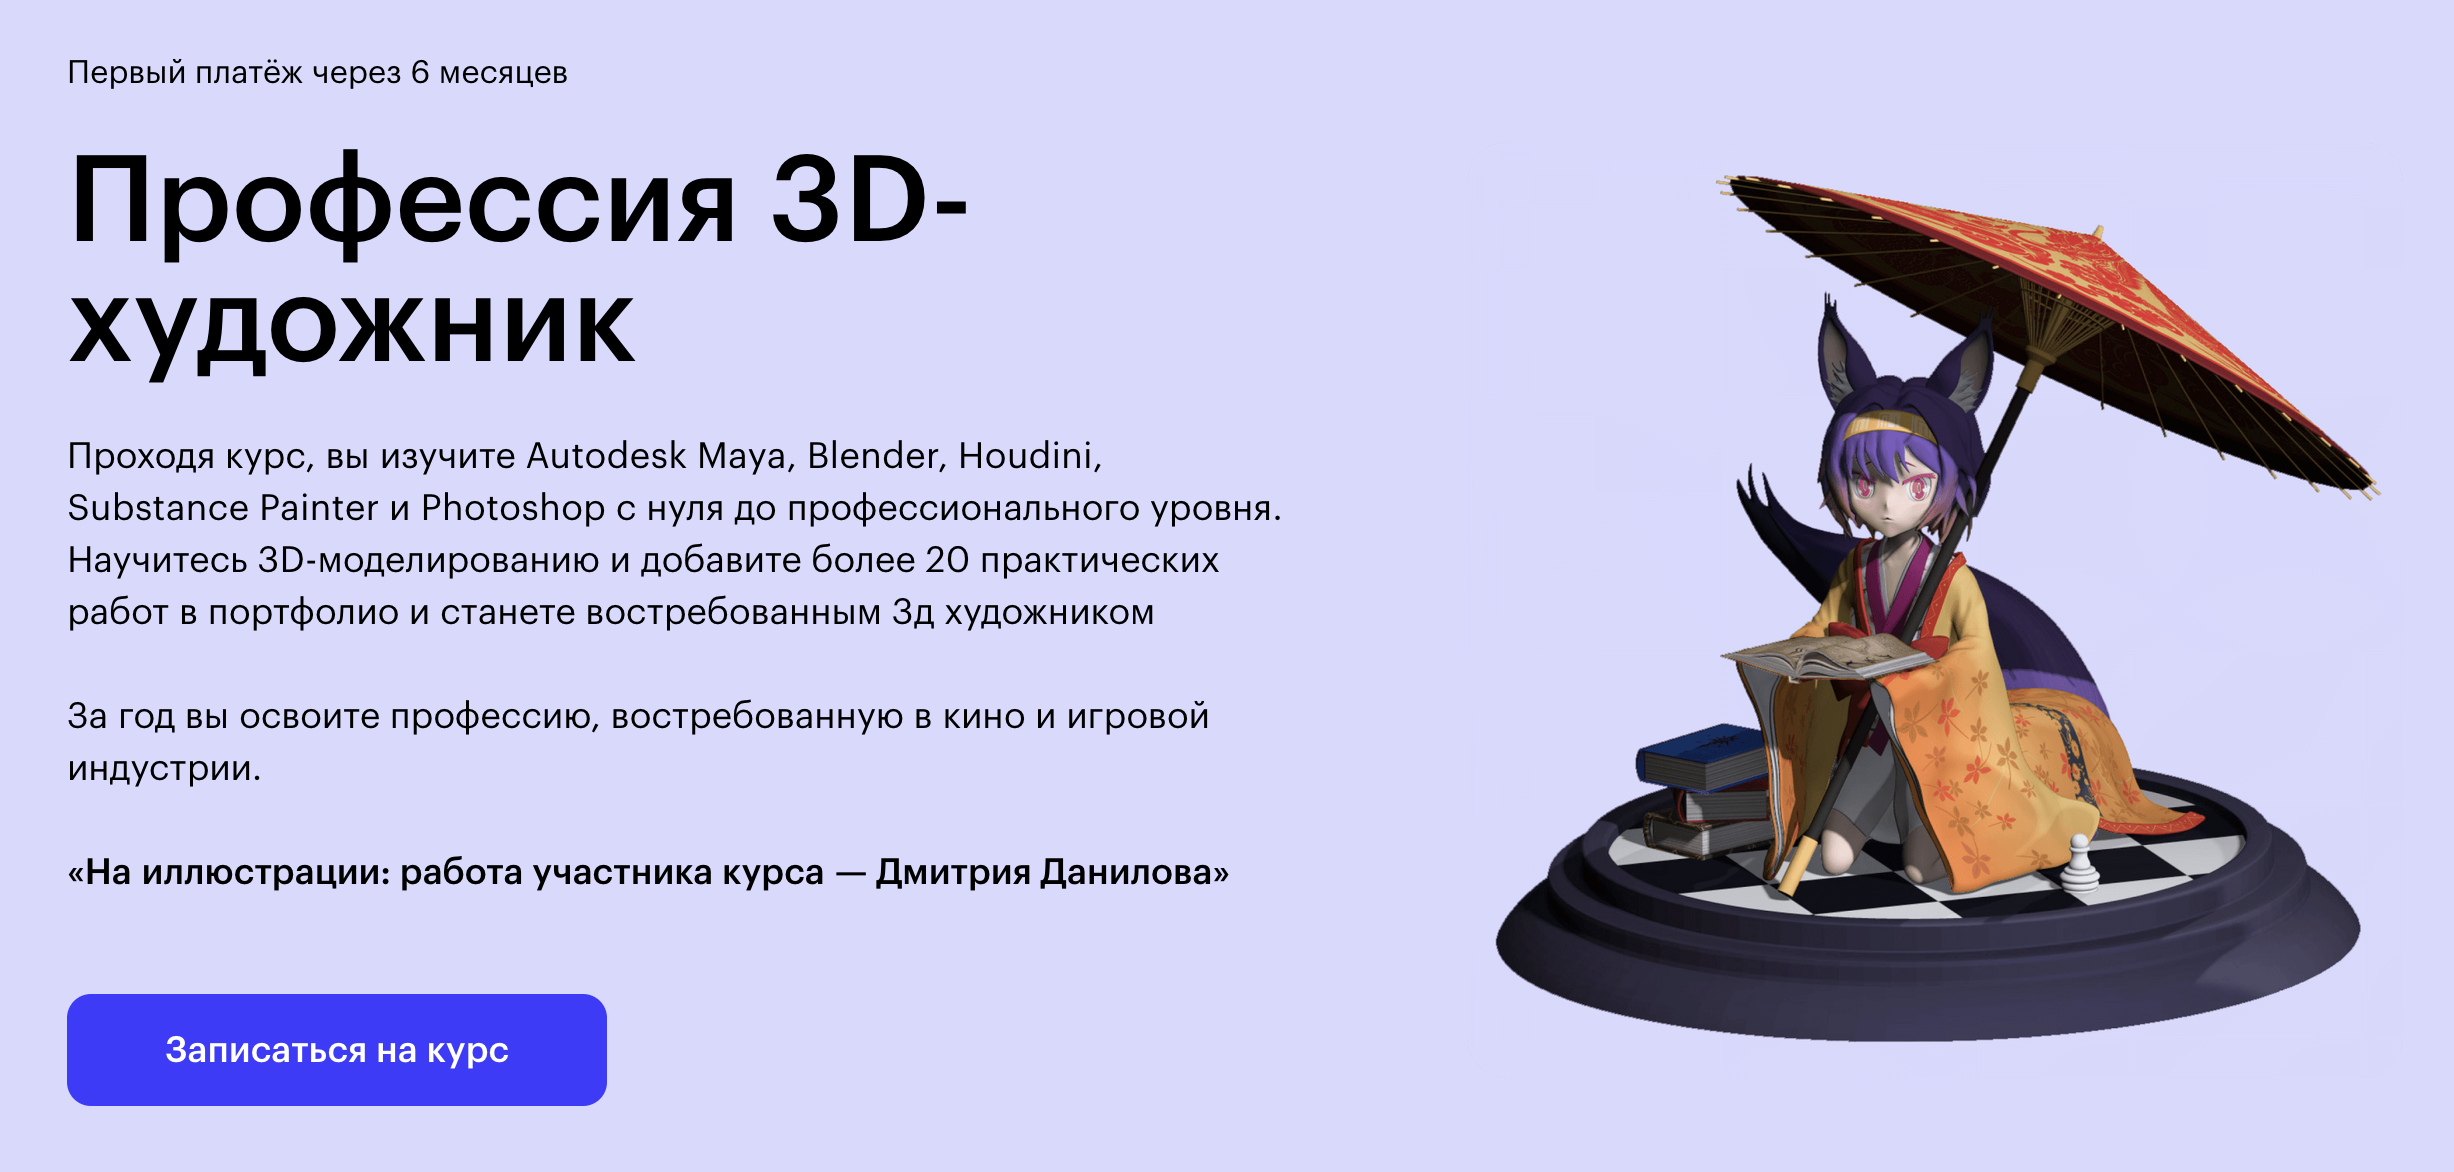 Skillbox: Профессия 3D-художник